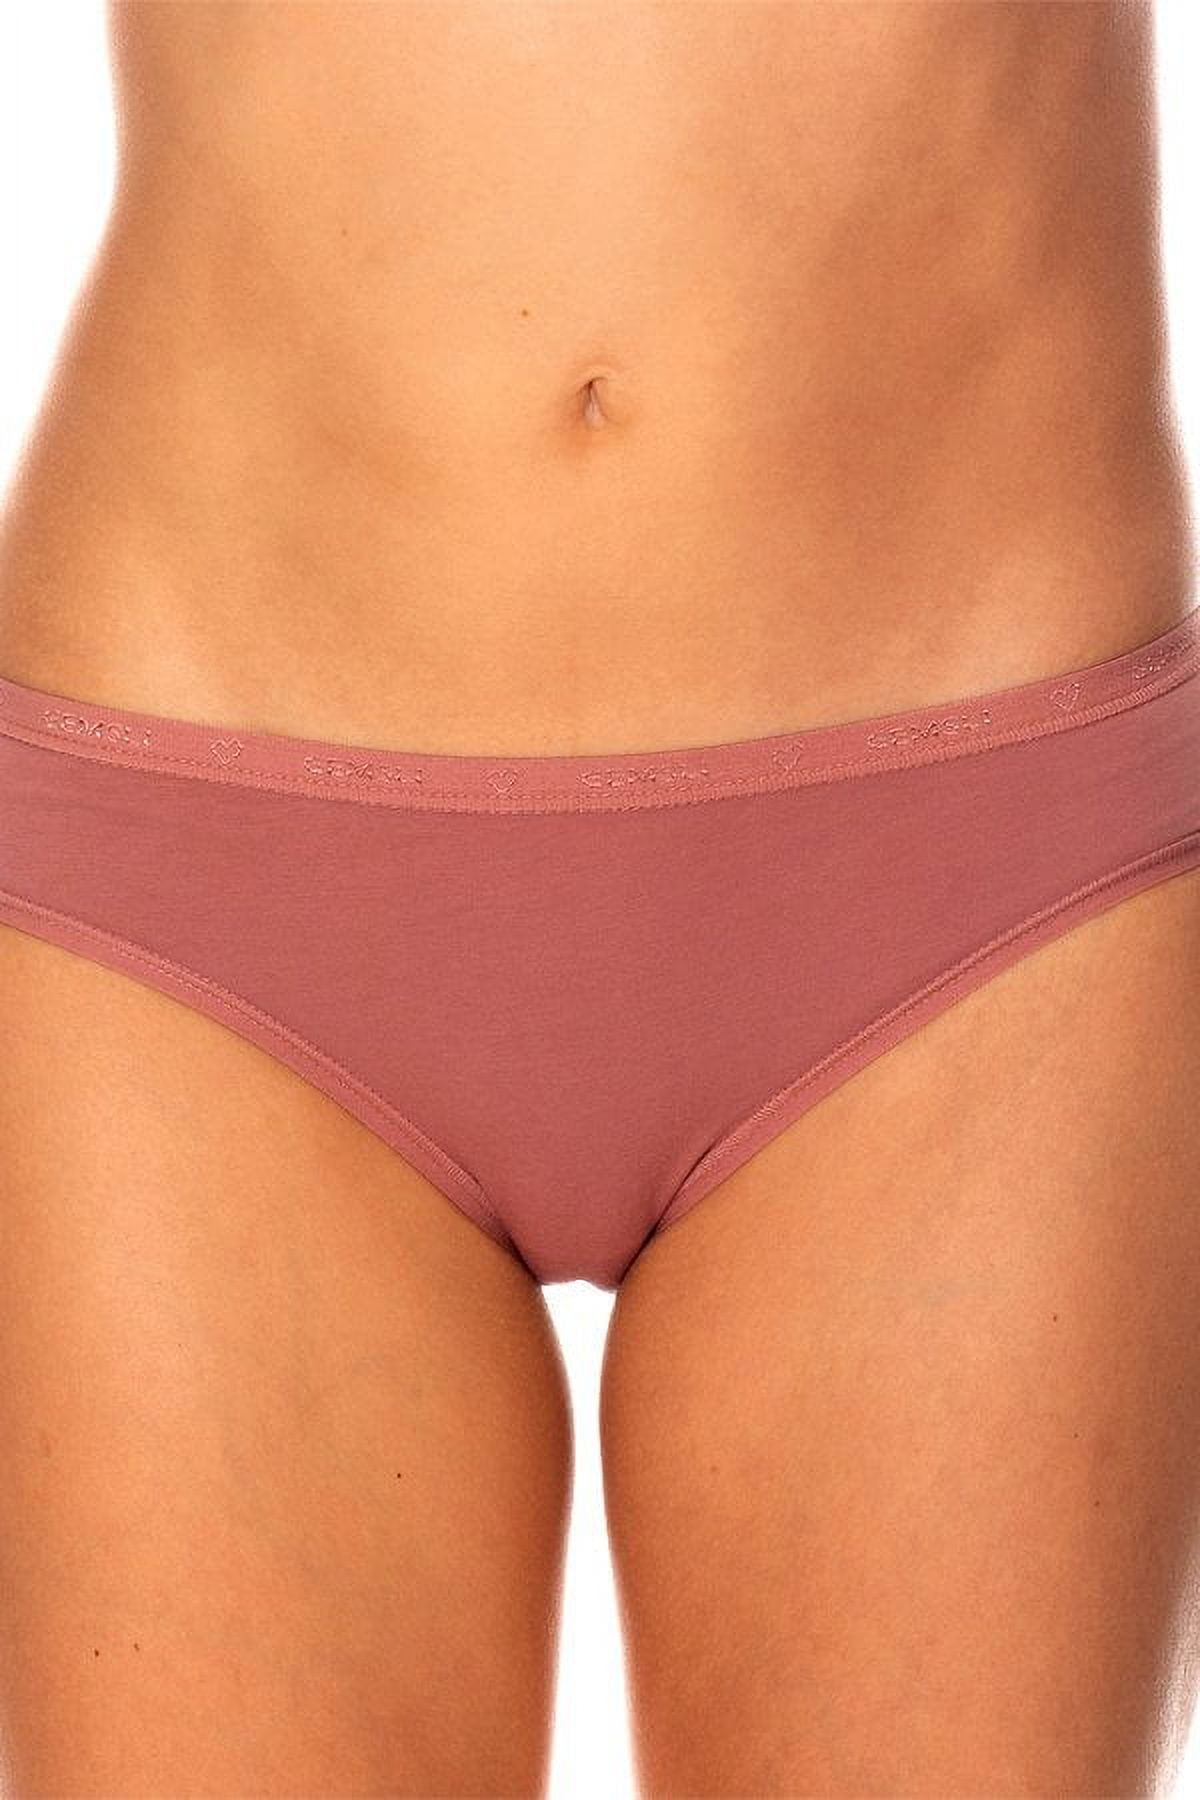 Hanes Originals Women's Bikini Underwear, Soft & Stretchy Ribbed Blend,  3-Pack 